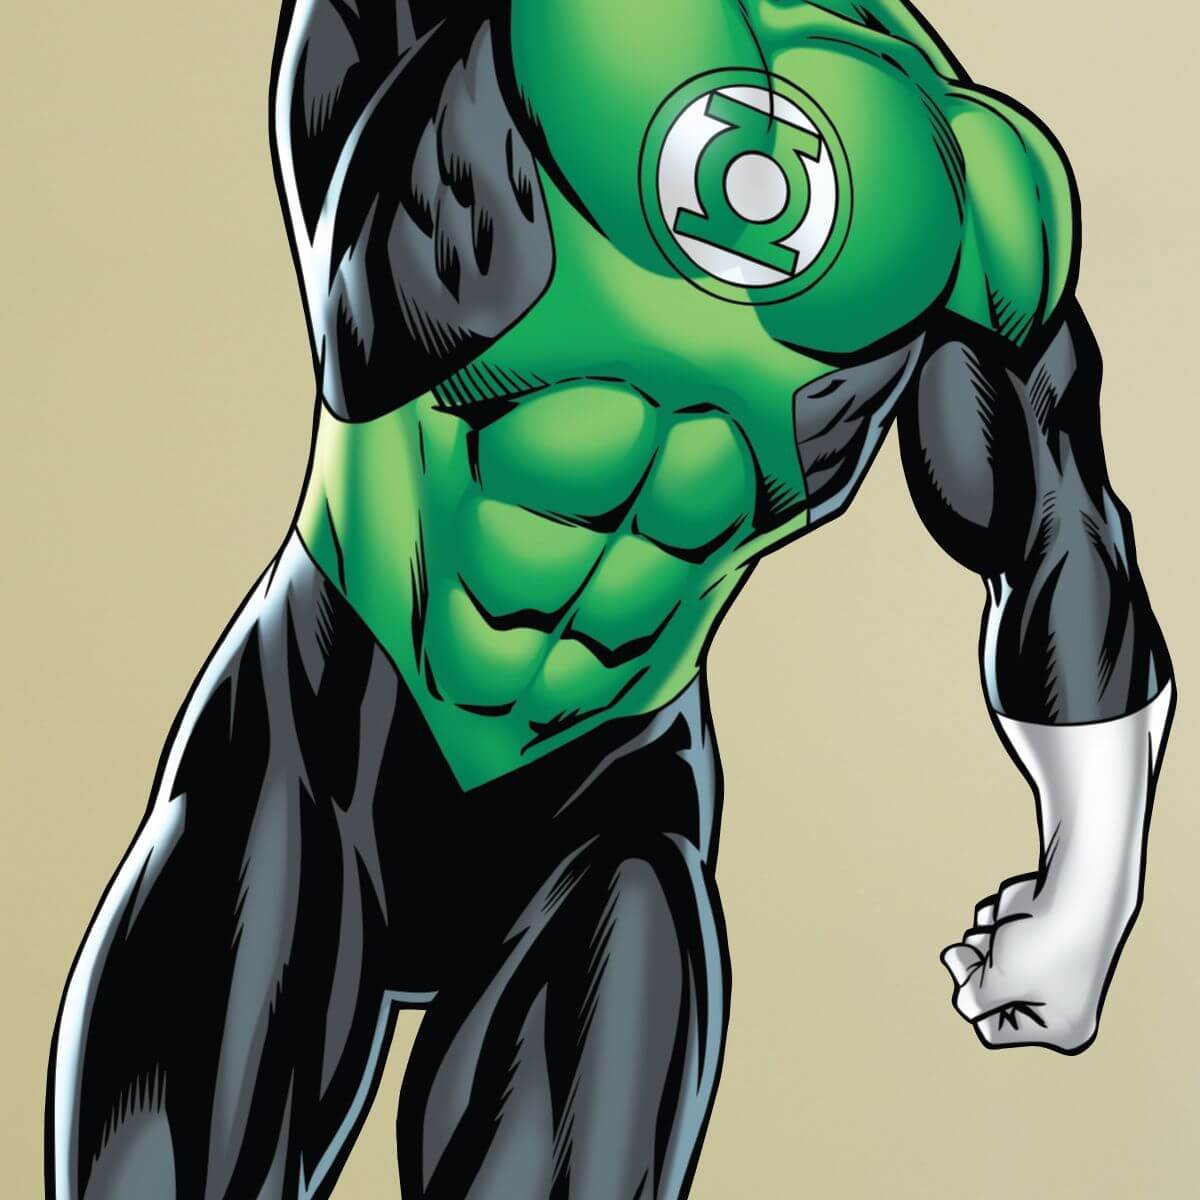 a green lantern superhero casting a green fireball | | pencil sk... -  Arthub.ai